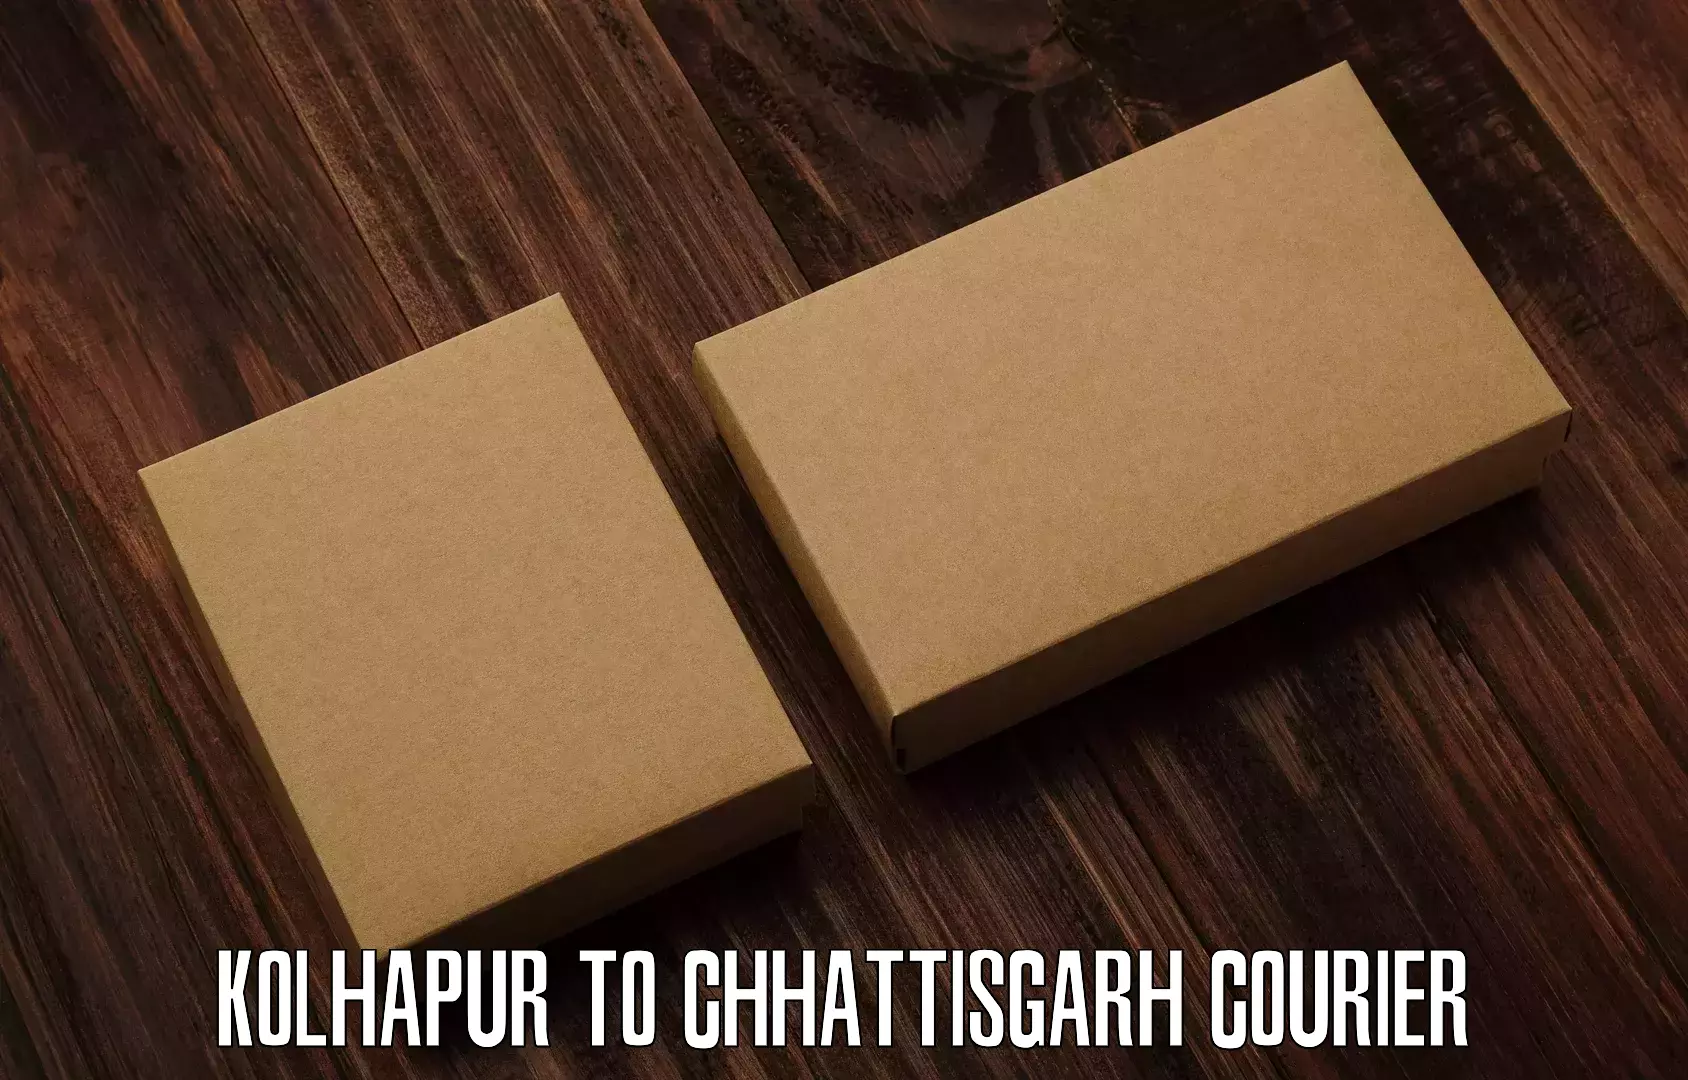 Enhanced shipping experience in Kolhapur to Patna Chhattisgarh